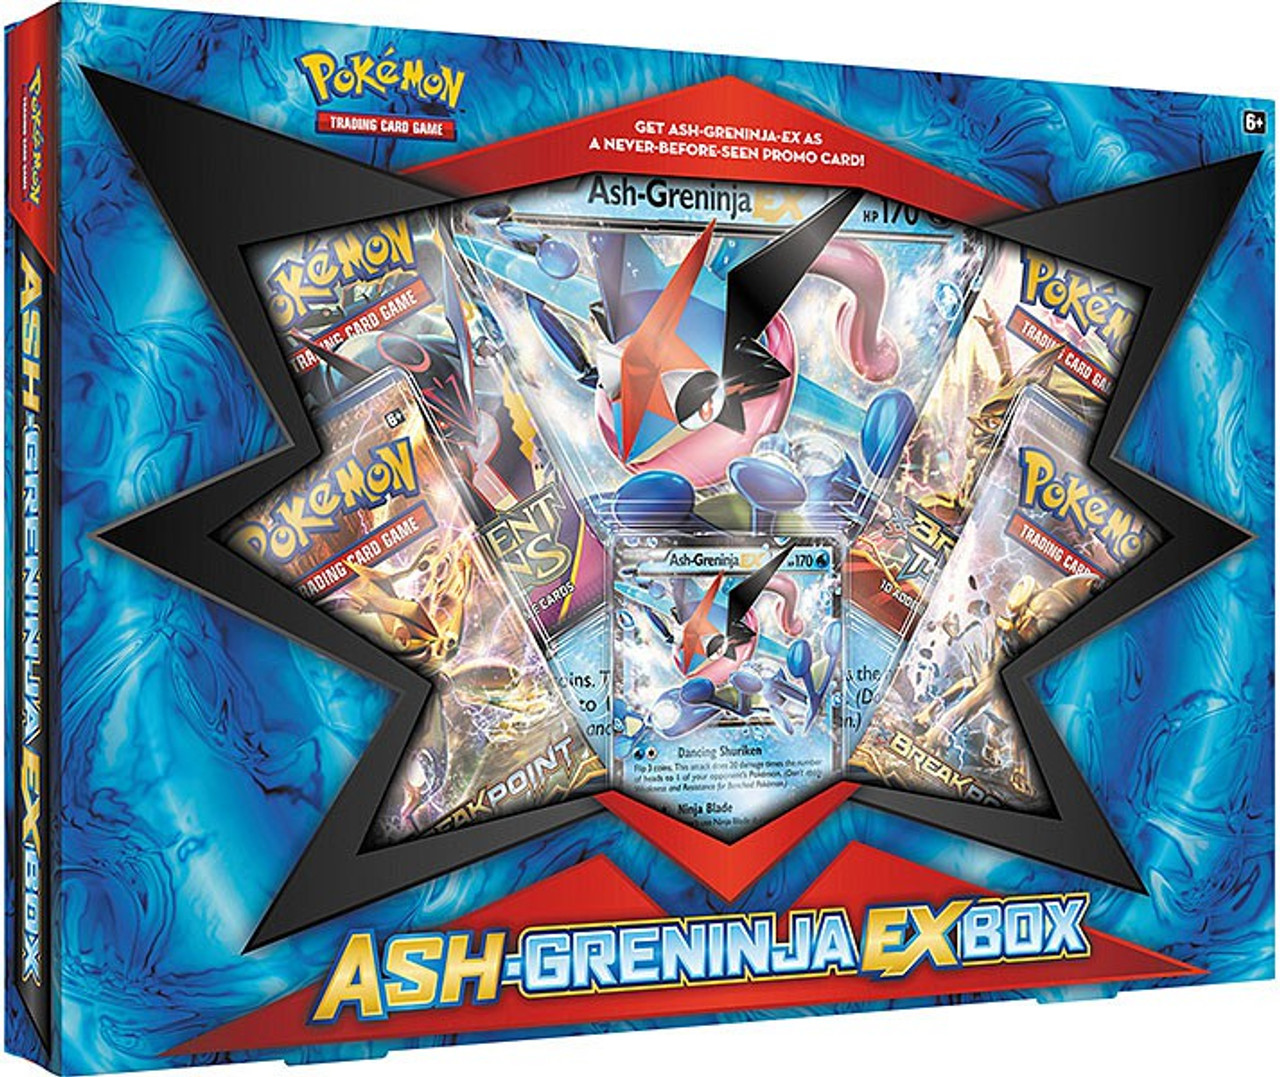 Pokemon Trading Card Game Xy Ash Greninja Ex Box 4 Booster Packs Promo Card Oversize Card Pokemon Usa Toywiz - ash greninja roblox